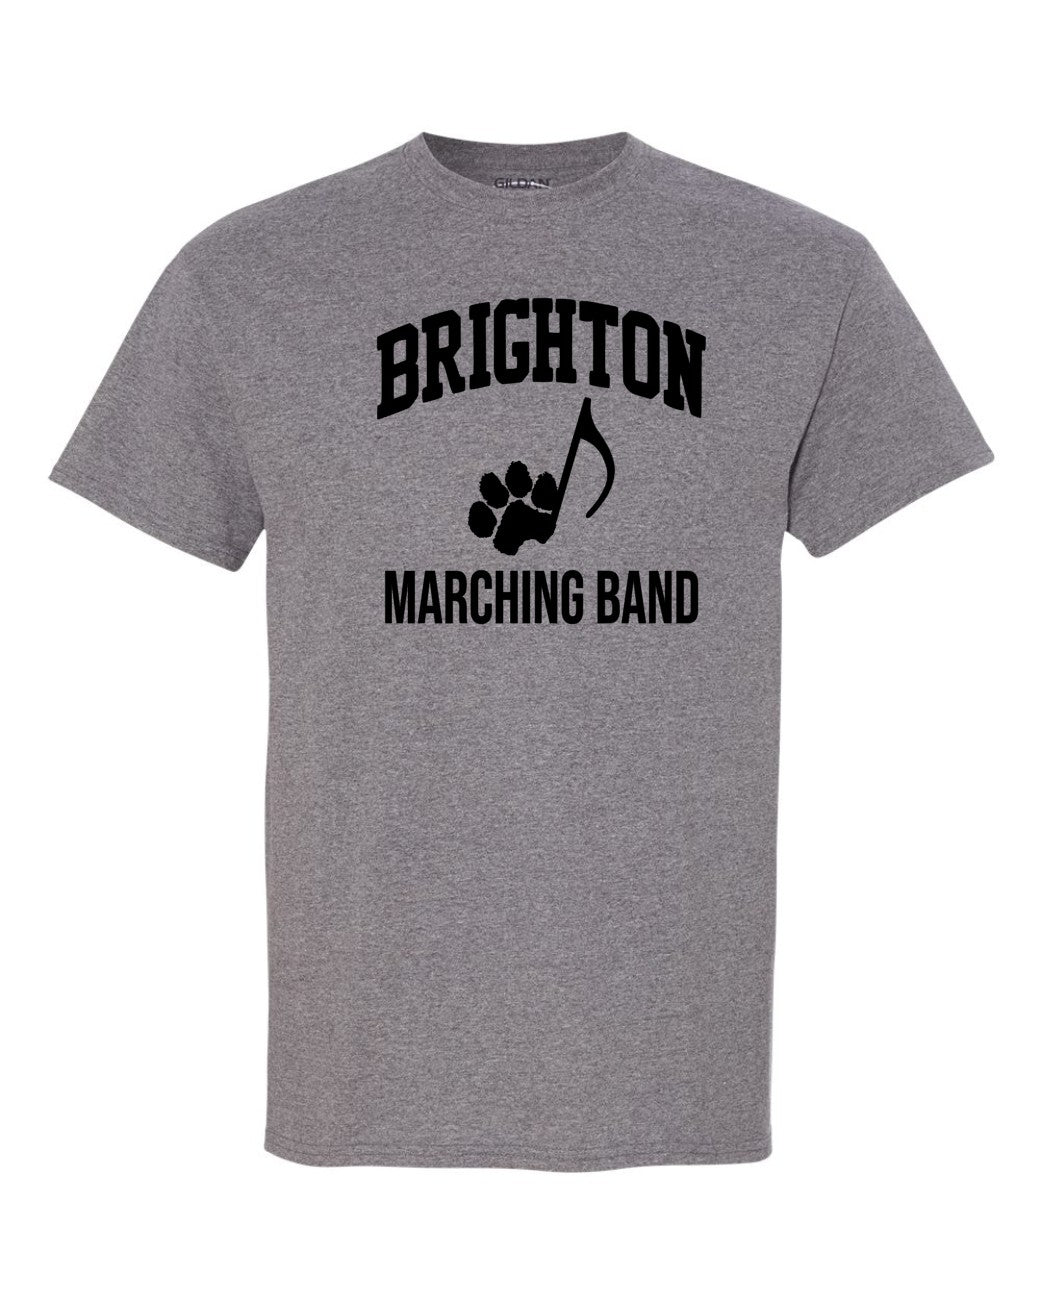 Brighton Marching Band Tee